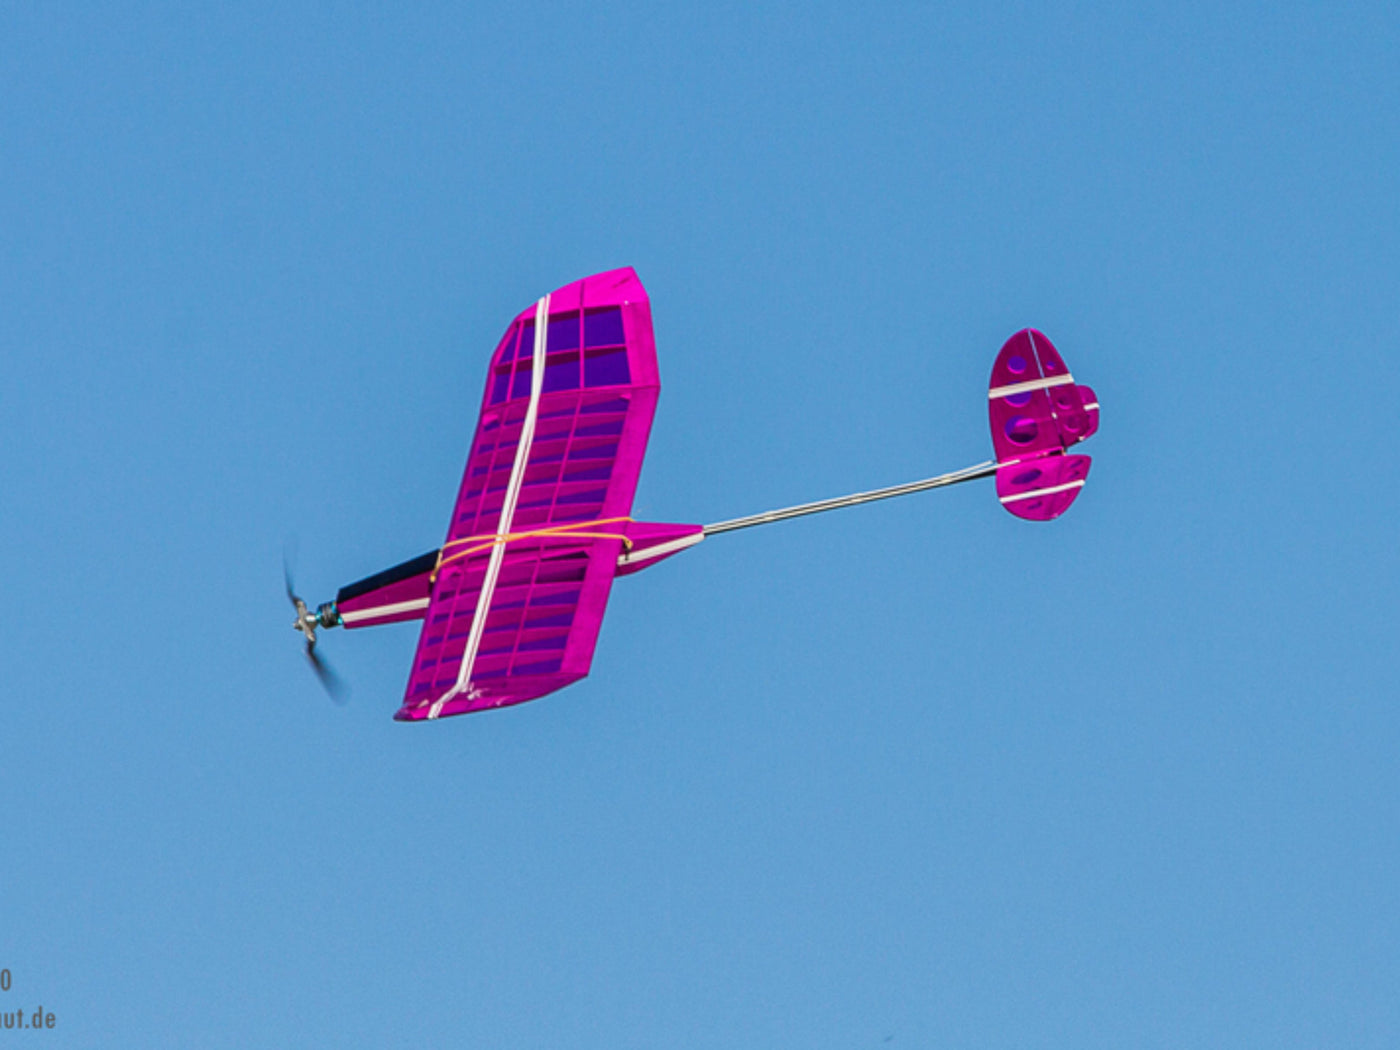 The Quido 1 Meter Electric Plane by Aero-naut